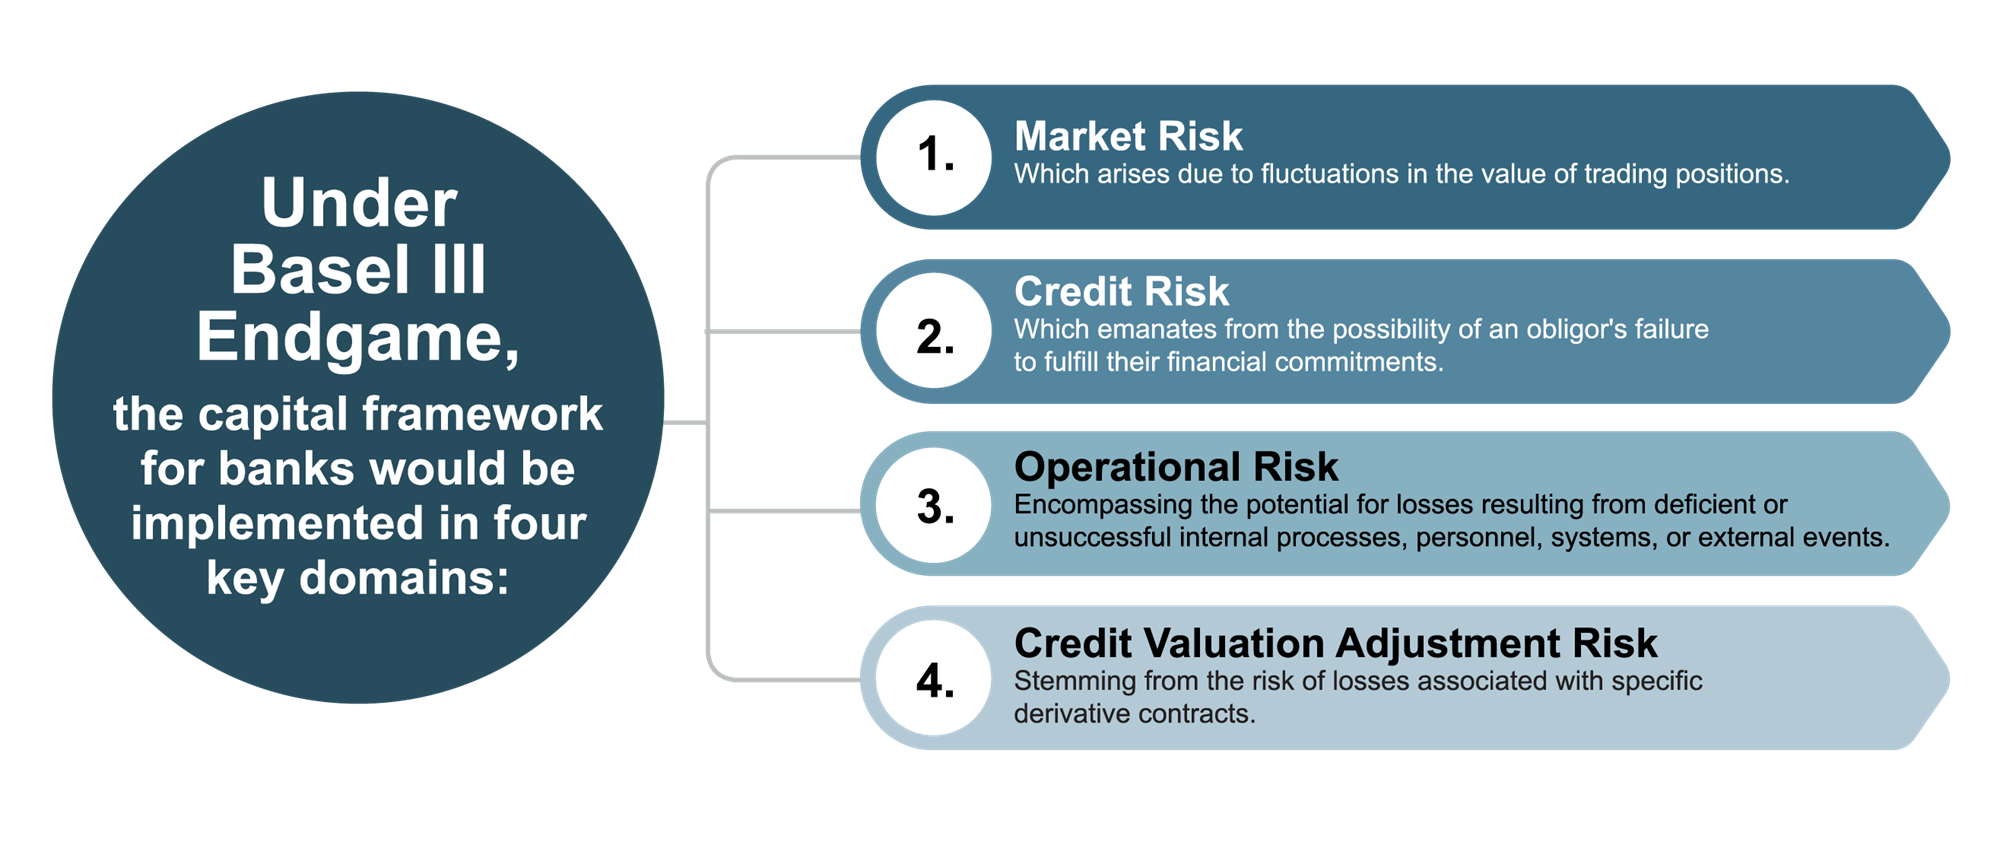 Under Basel III Endgame, the capital framework for banks would be implemented in four key domains: Market Risk, Credit Risk, Operational Risk, and Credit Valuations Adjustment Risk